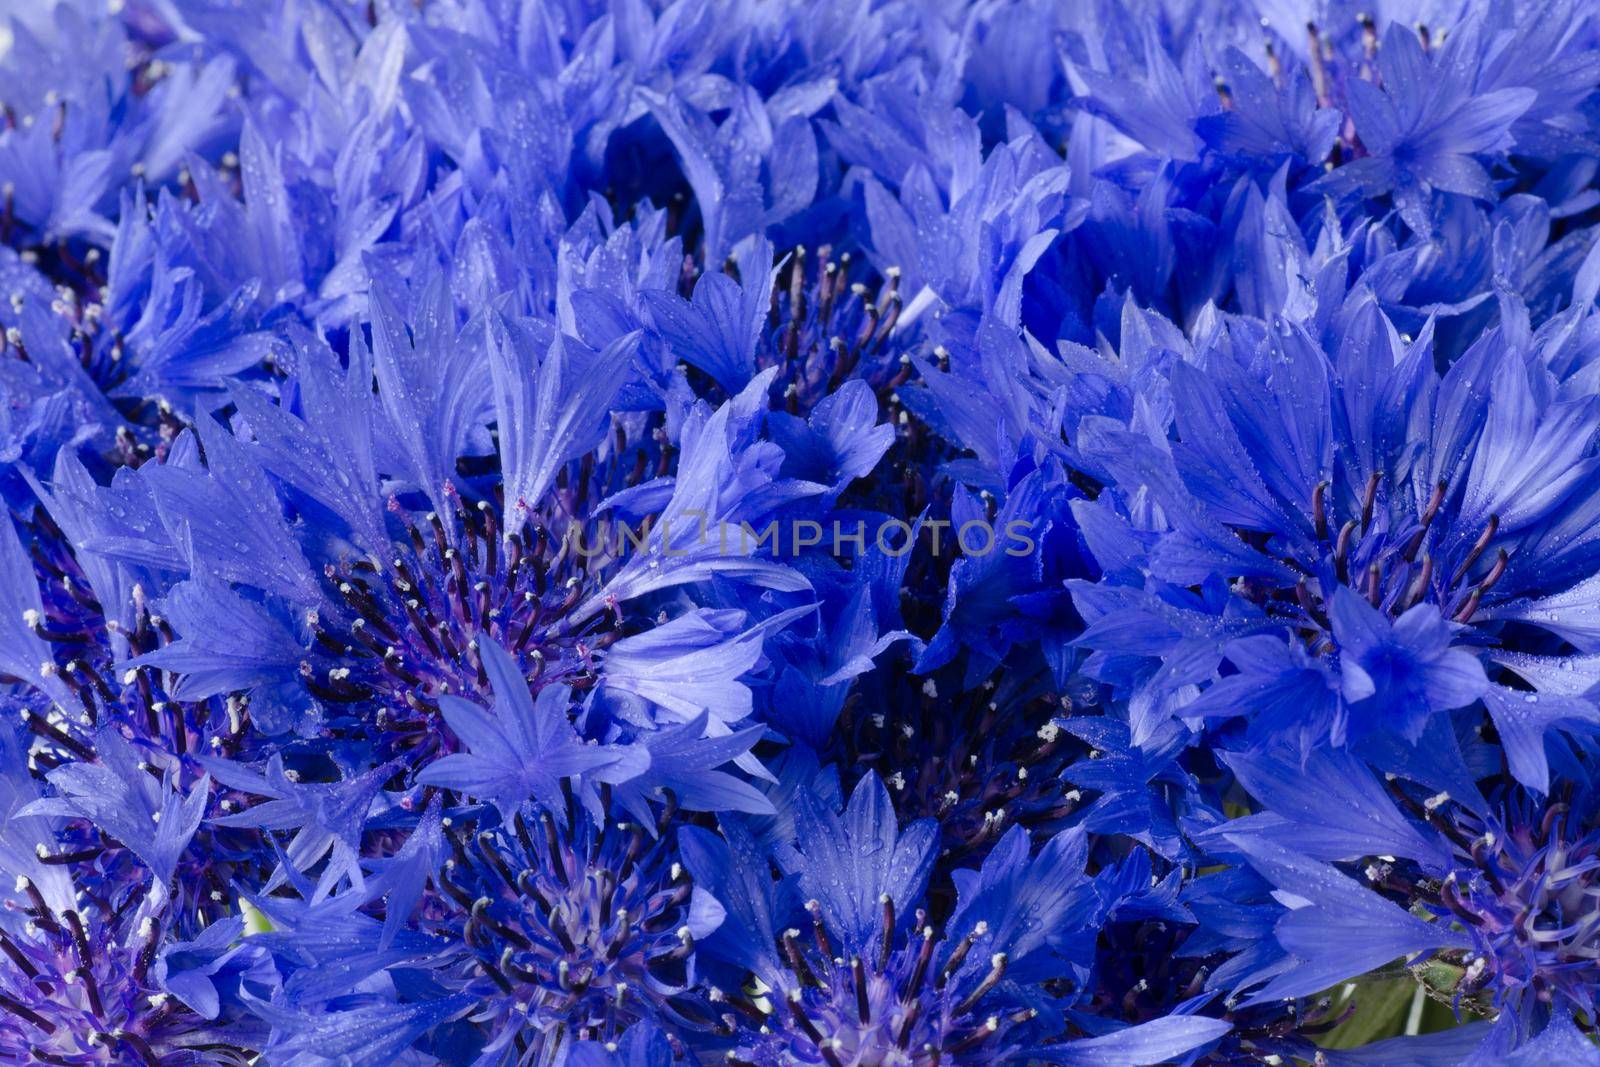 Mackro Blue cornflower Flower Backdrop. Fine Art Natural Floral Photo Digital Studio Background for Portrait, Best for cute family photos, atmospheric newborn designs. Textures Overlays